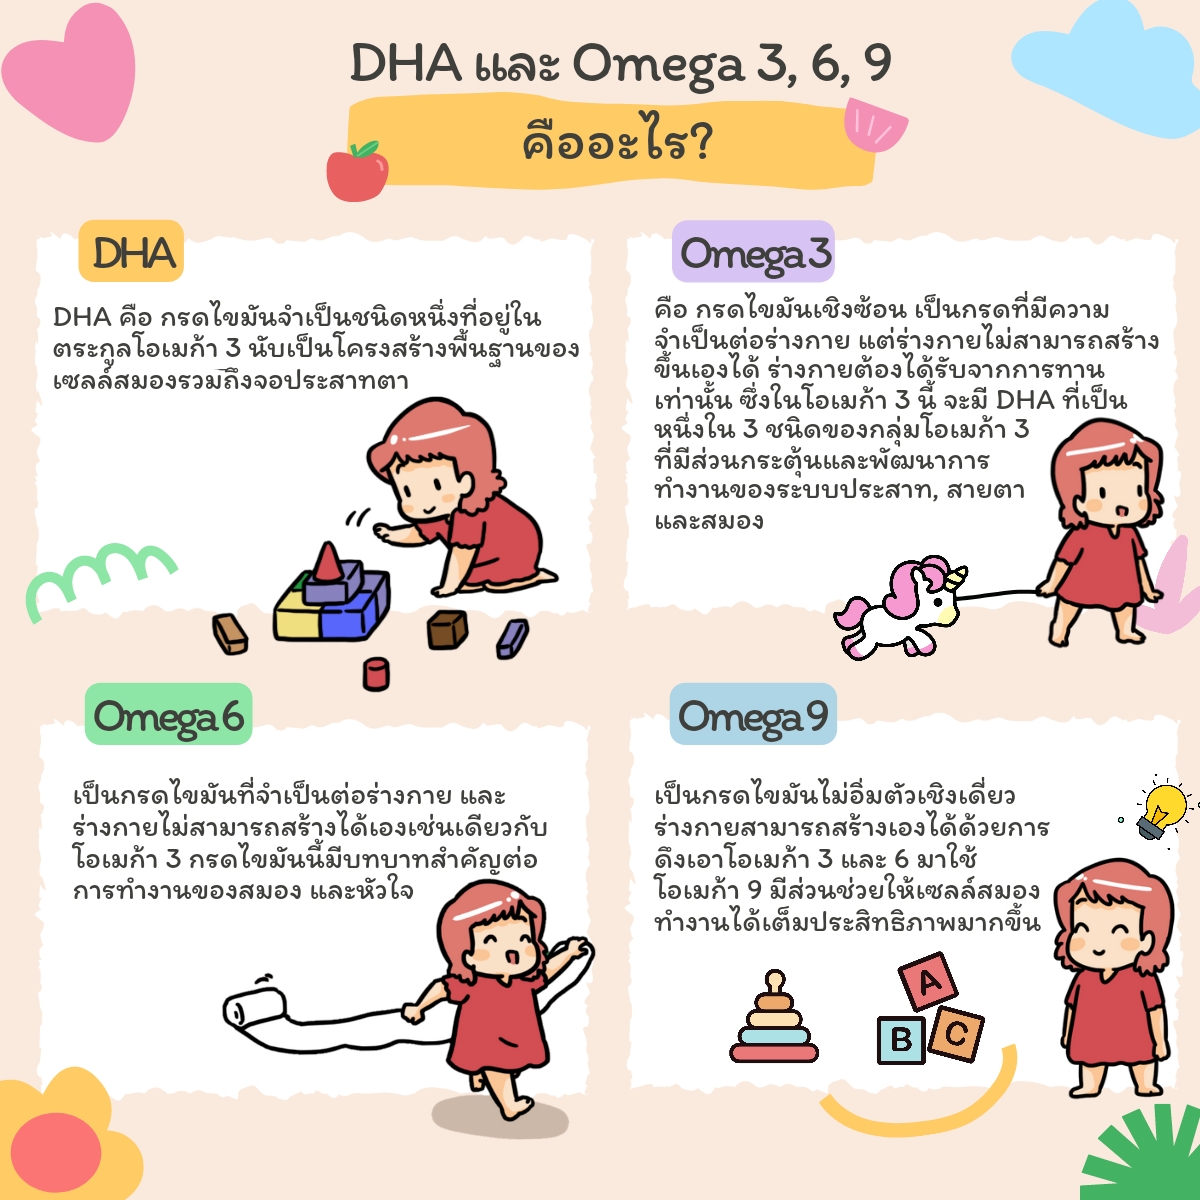 DHA และ Omega 3, 6, 9 คืออะไร?